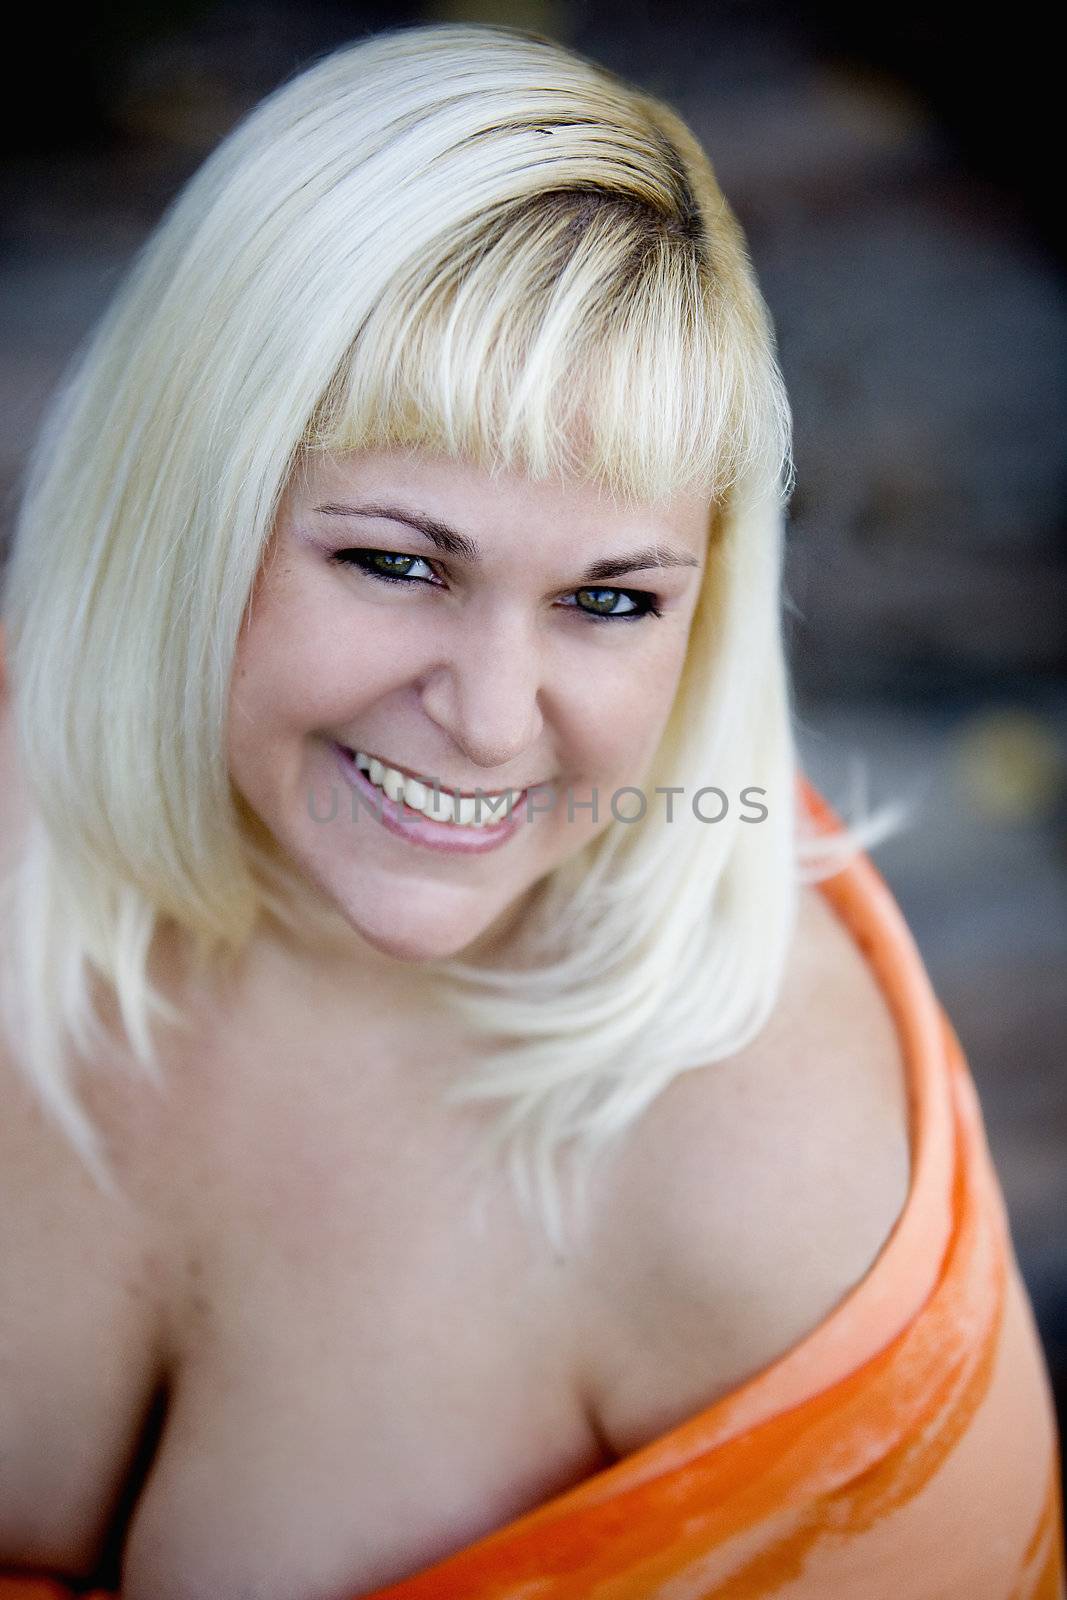 Sexy voluptuous blonde smiling by krazeedrocks